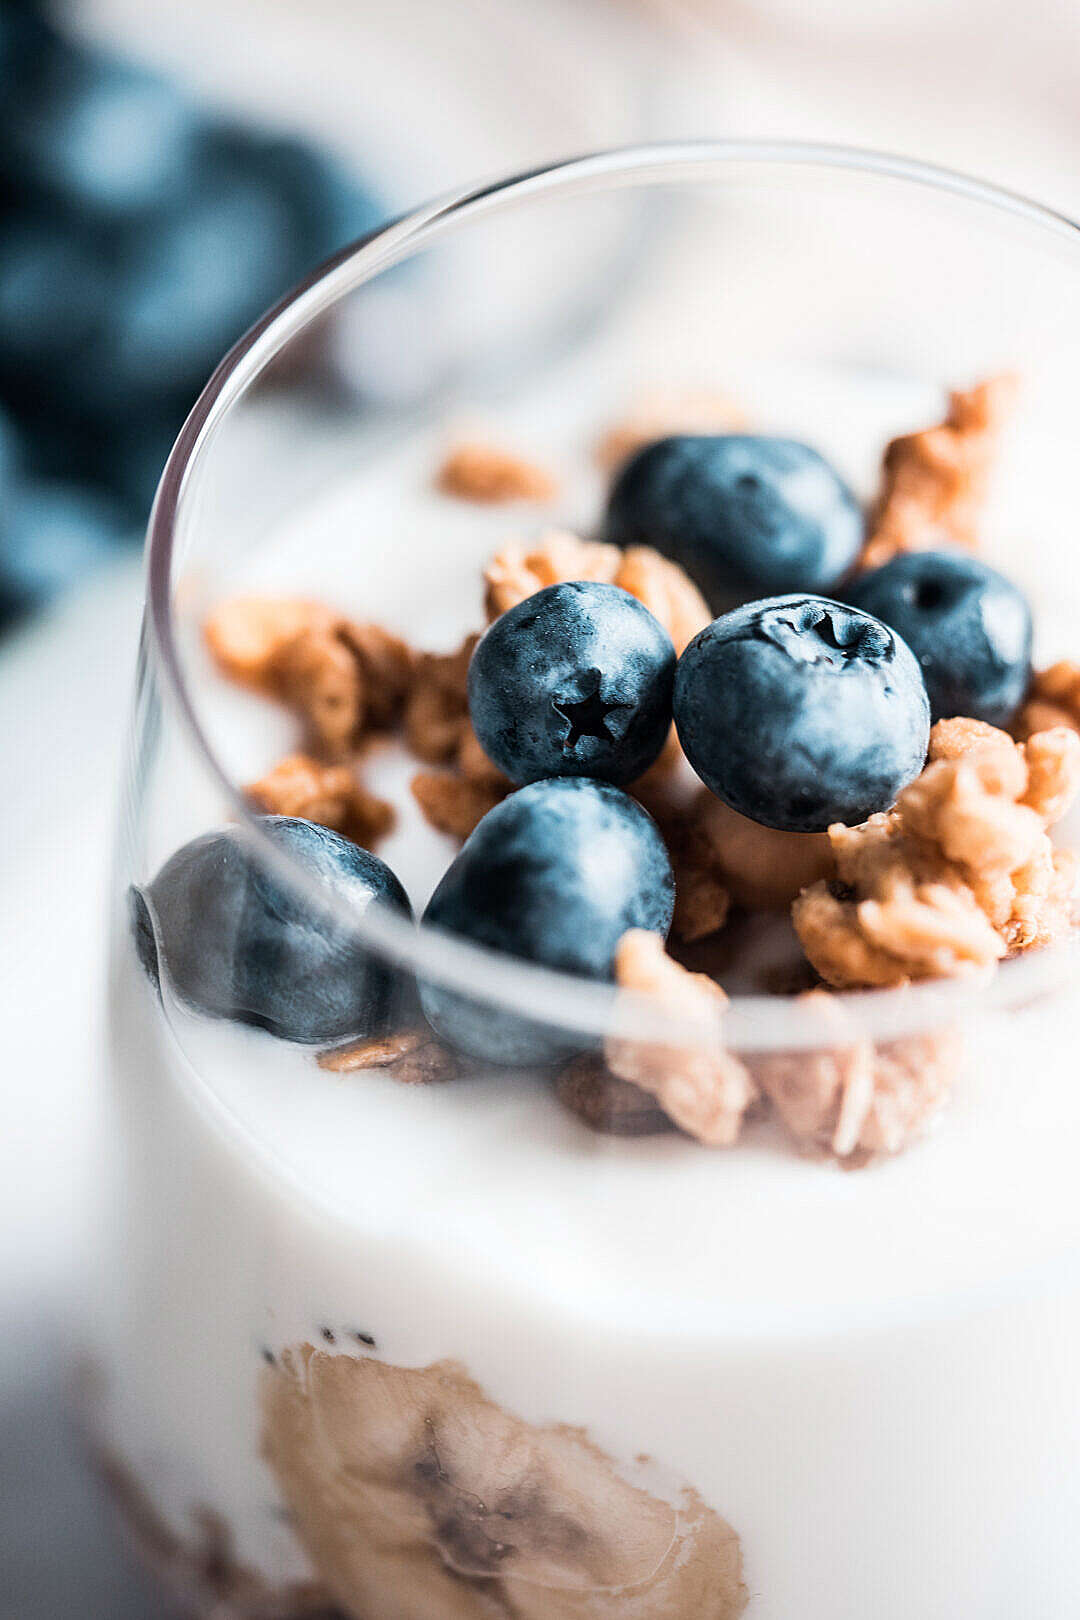 Download Blueberries in Müsli Fitness Breakfast FREE Stock Photo